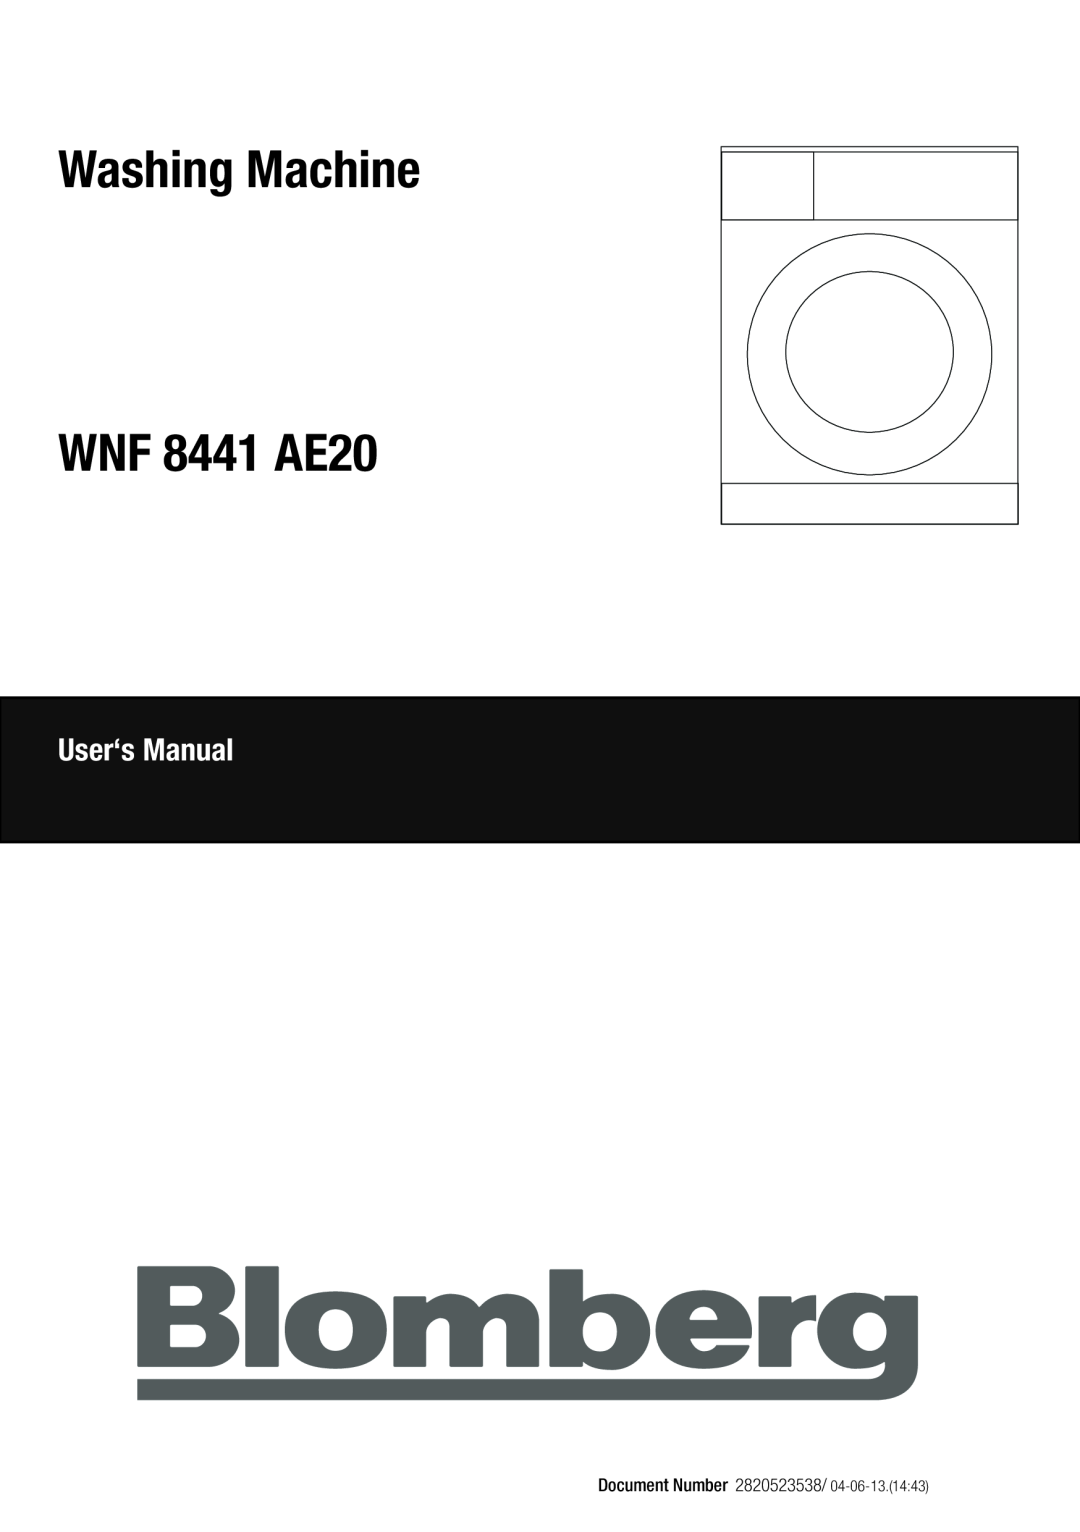 Blomberg user manual Washing Machine WNF 8441 AE20, User‘s Manual, Document Number 2820523538 